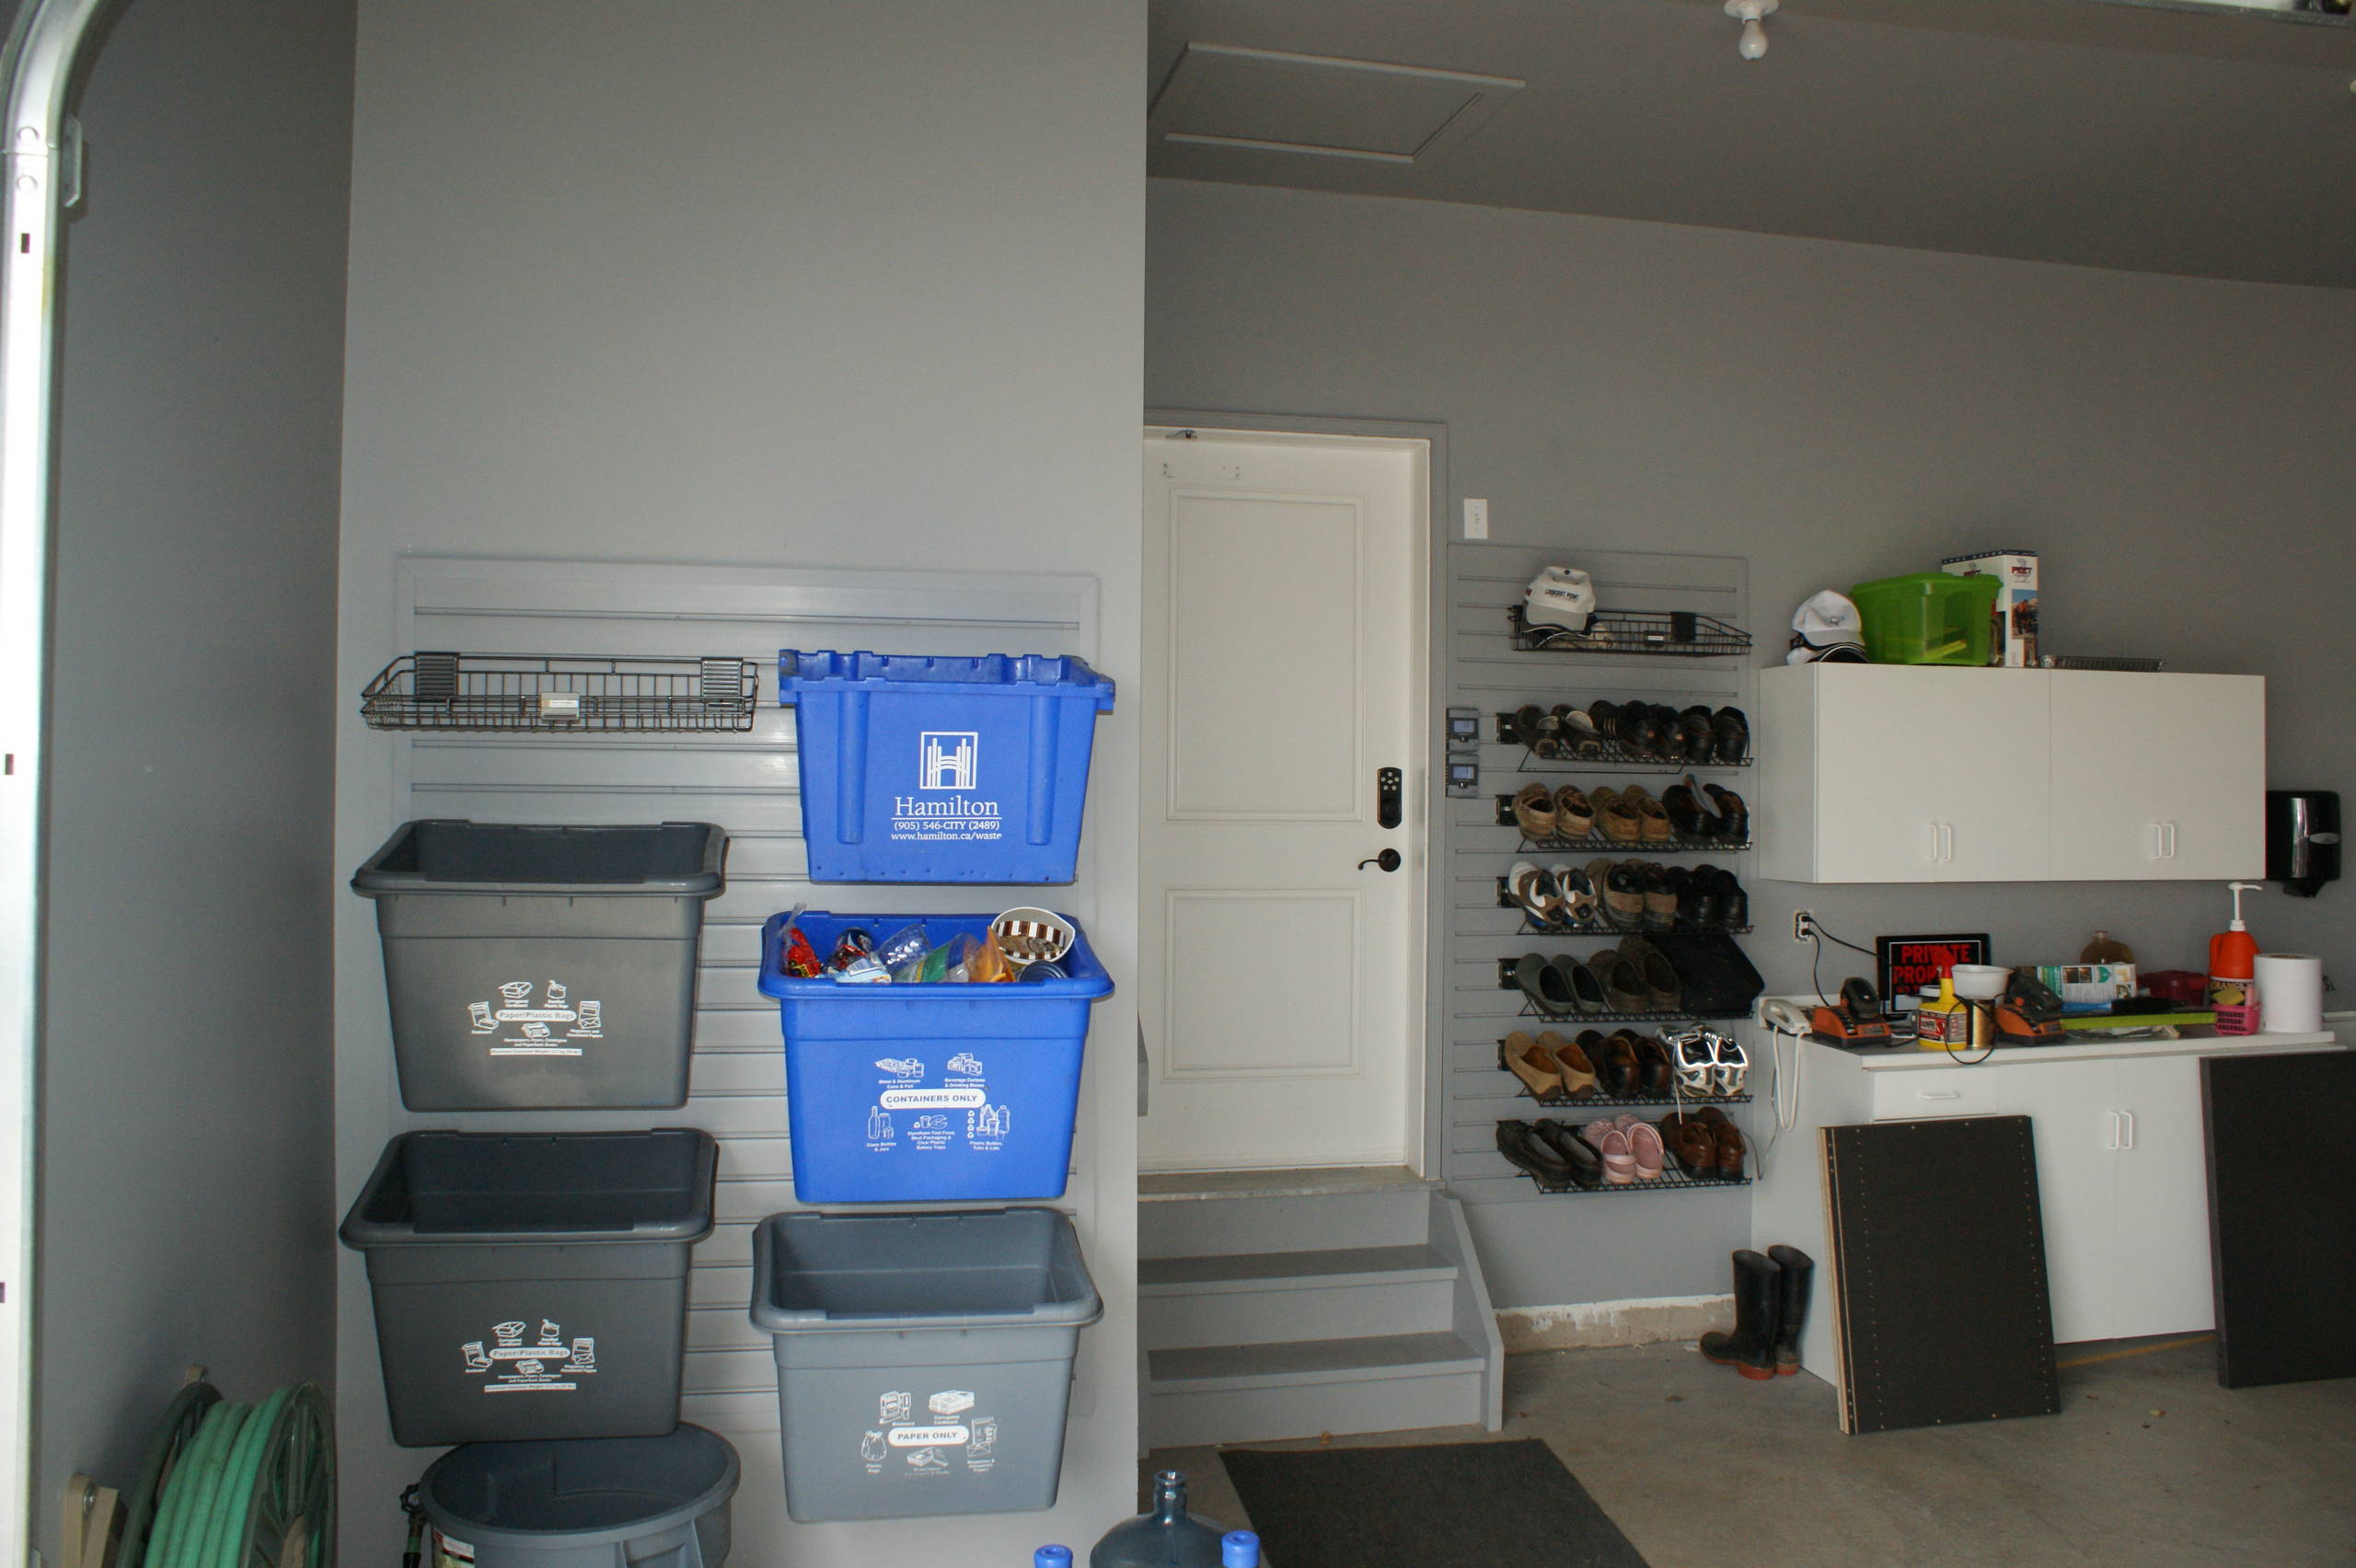 Heavy Duty Storage Tote/Recycle Tote - Garage Storage Cabinets, Slatwall